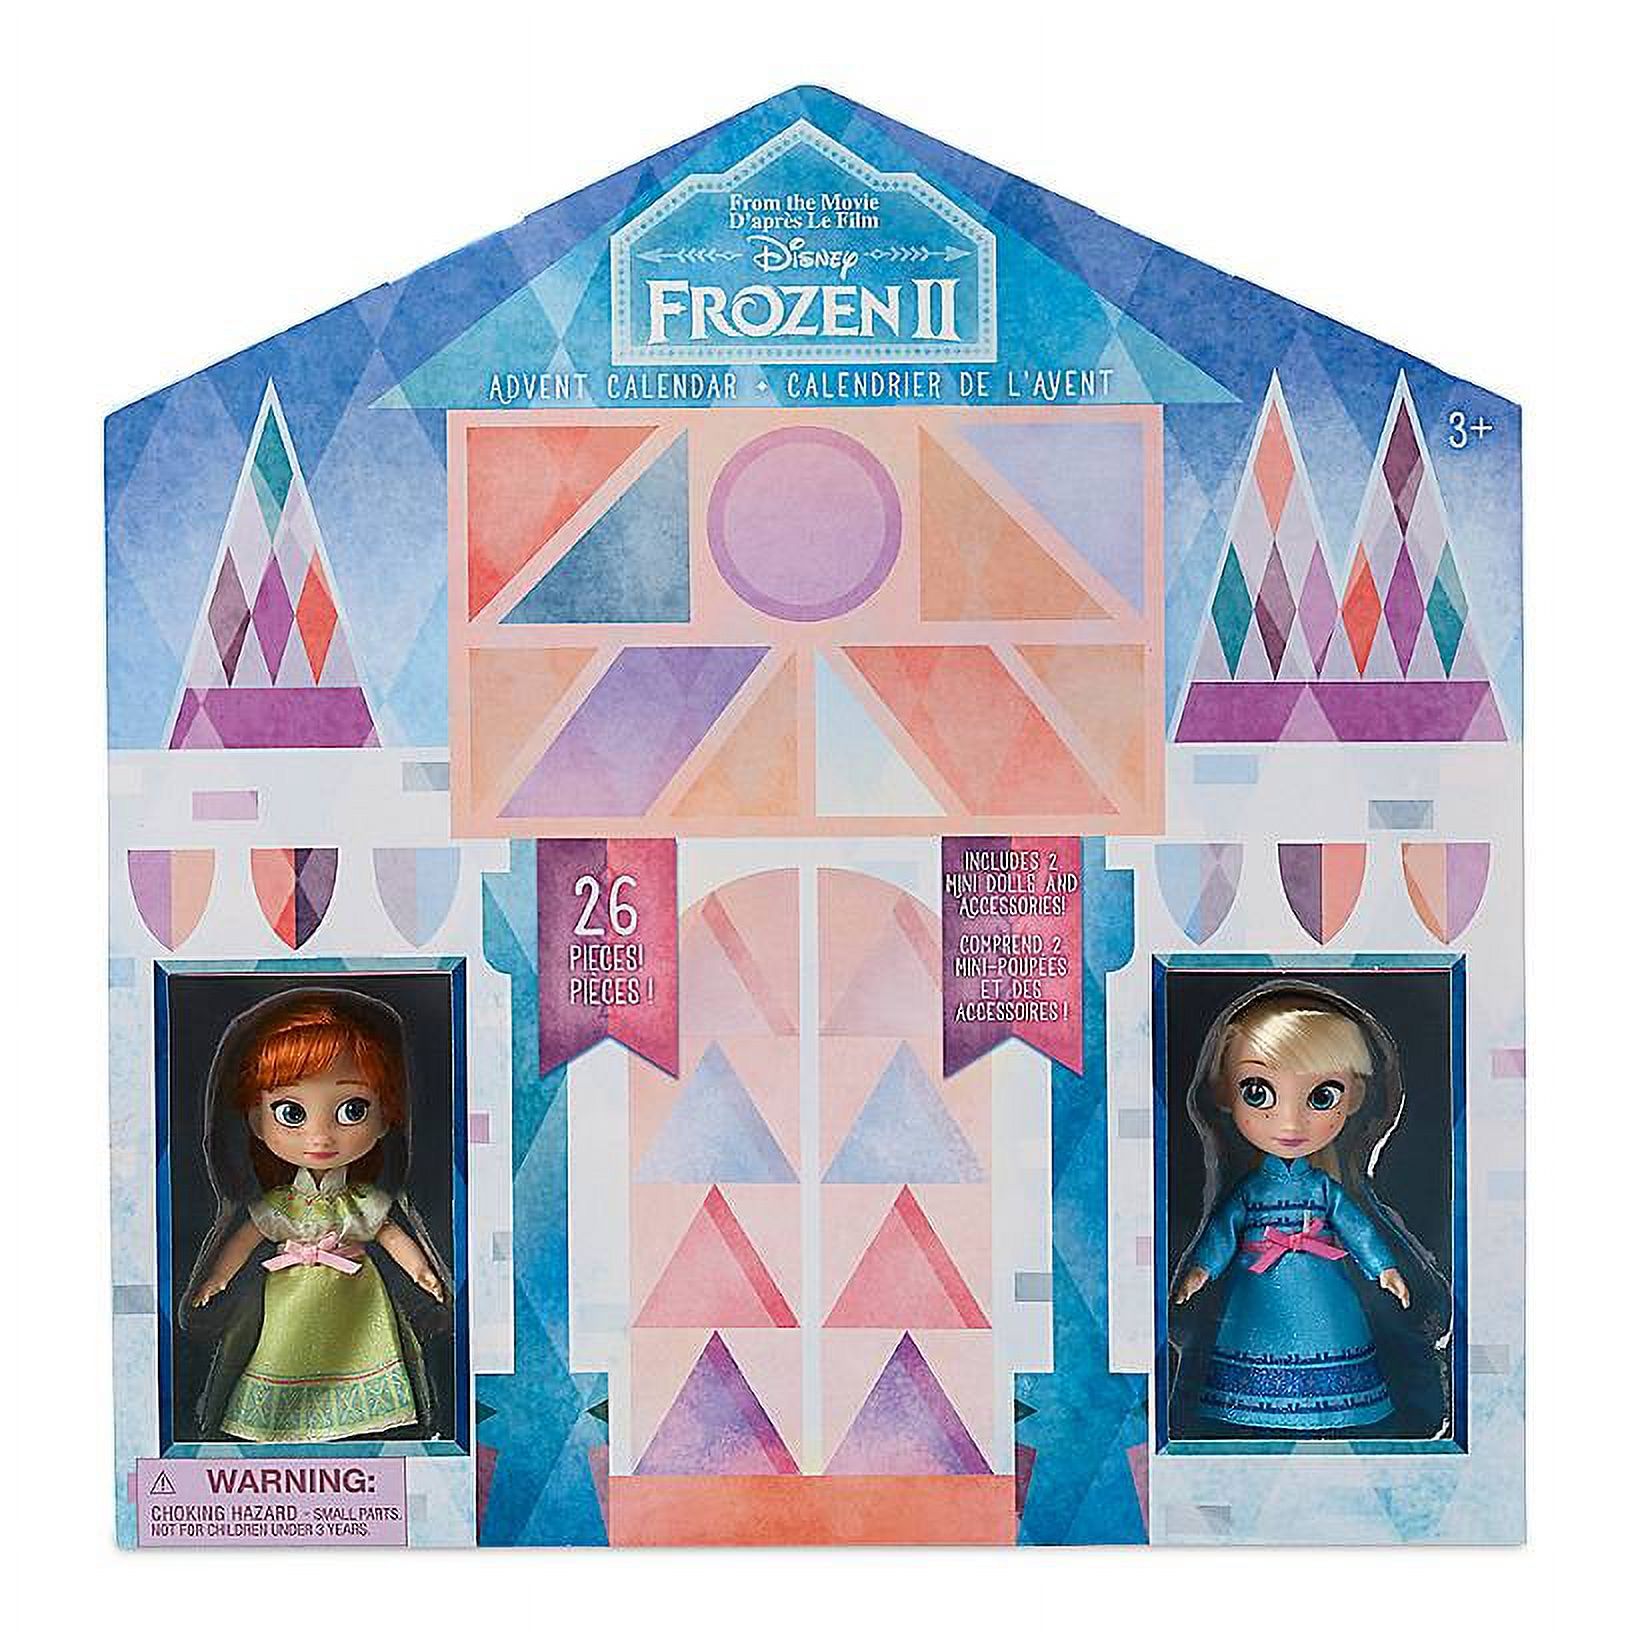 Disney Store Elsa Anna Frozen 2 Advent Calendar New with Box - image 1 of 4